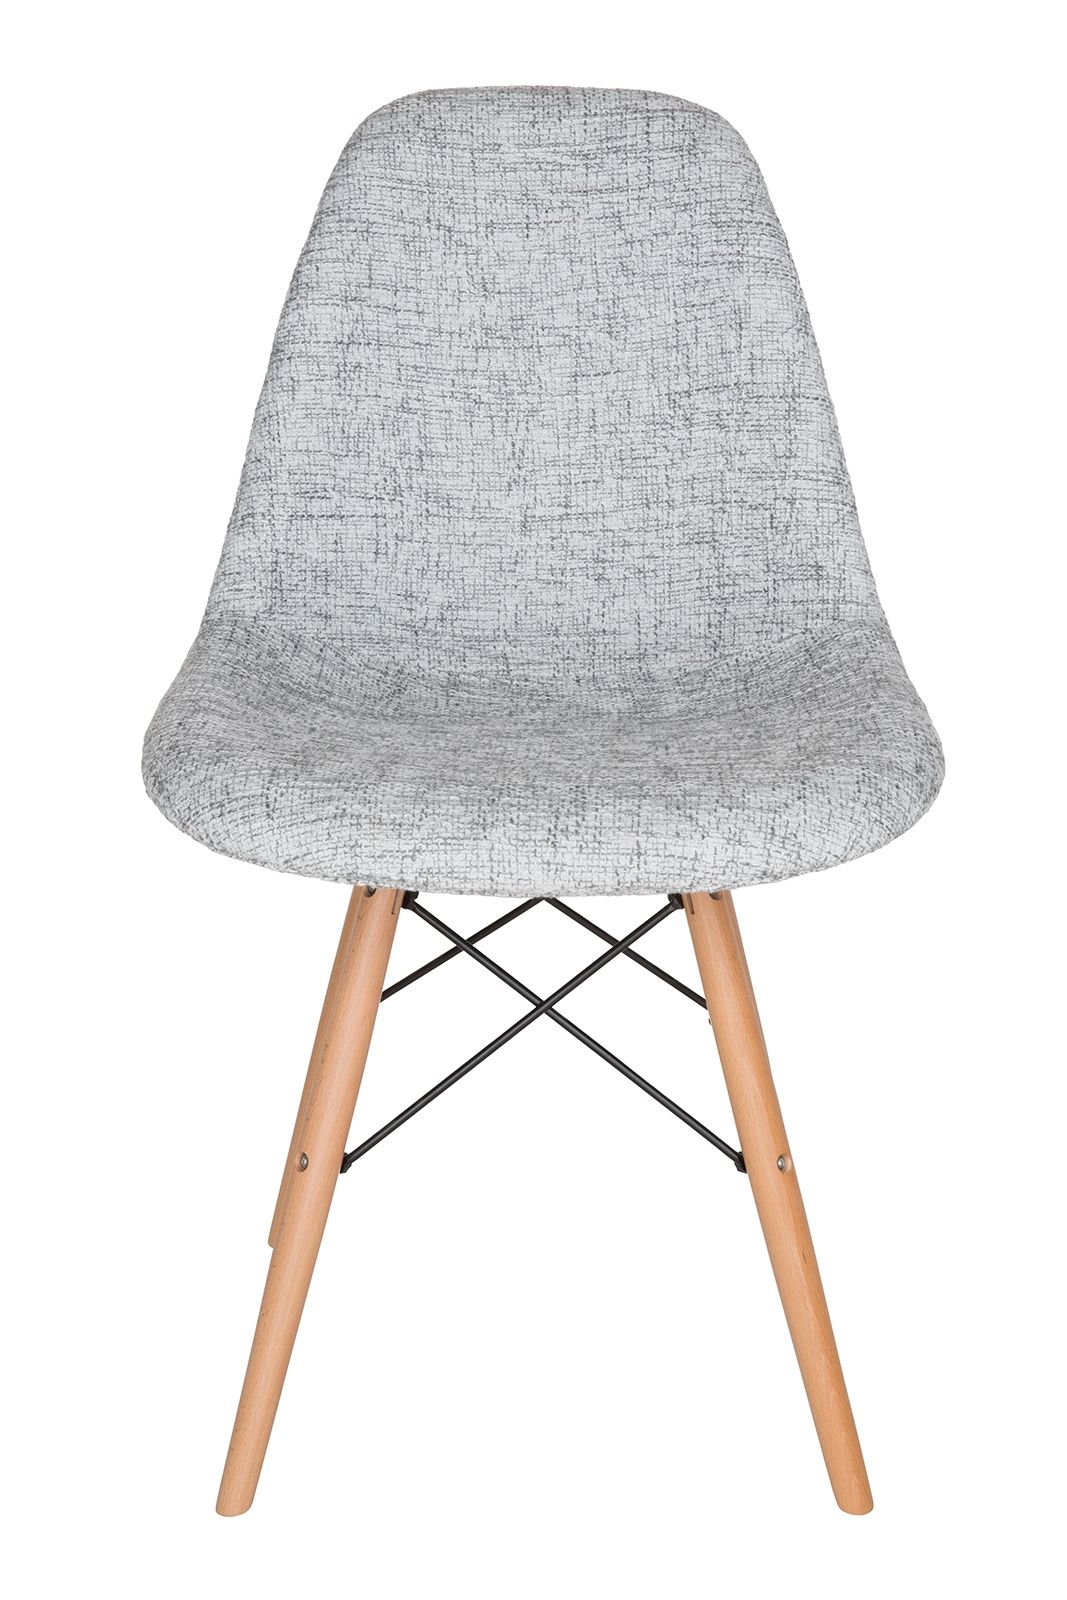 Replica Eames DSW Eiffel Chair | Textured Light Grey & Natural